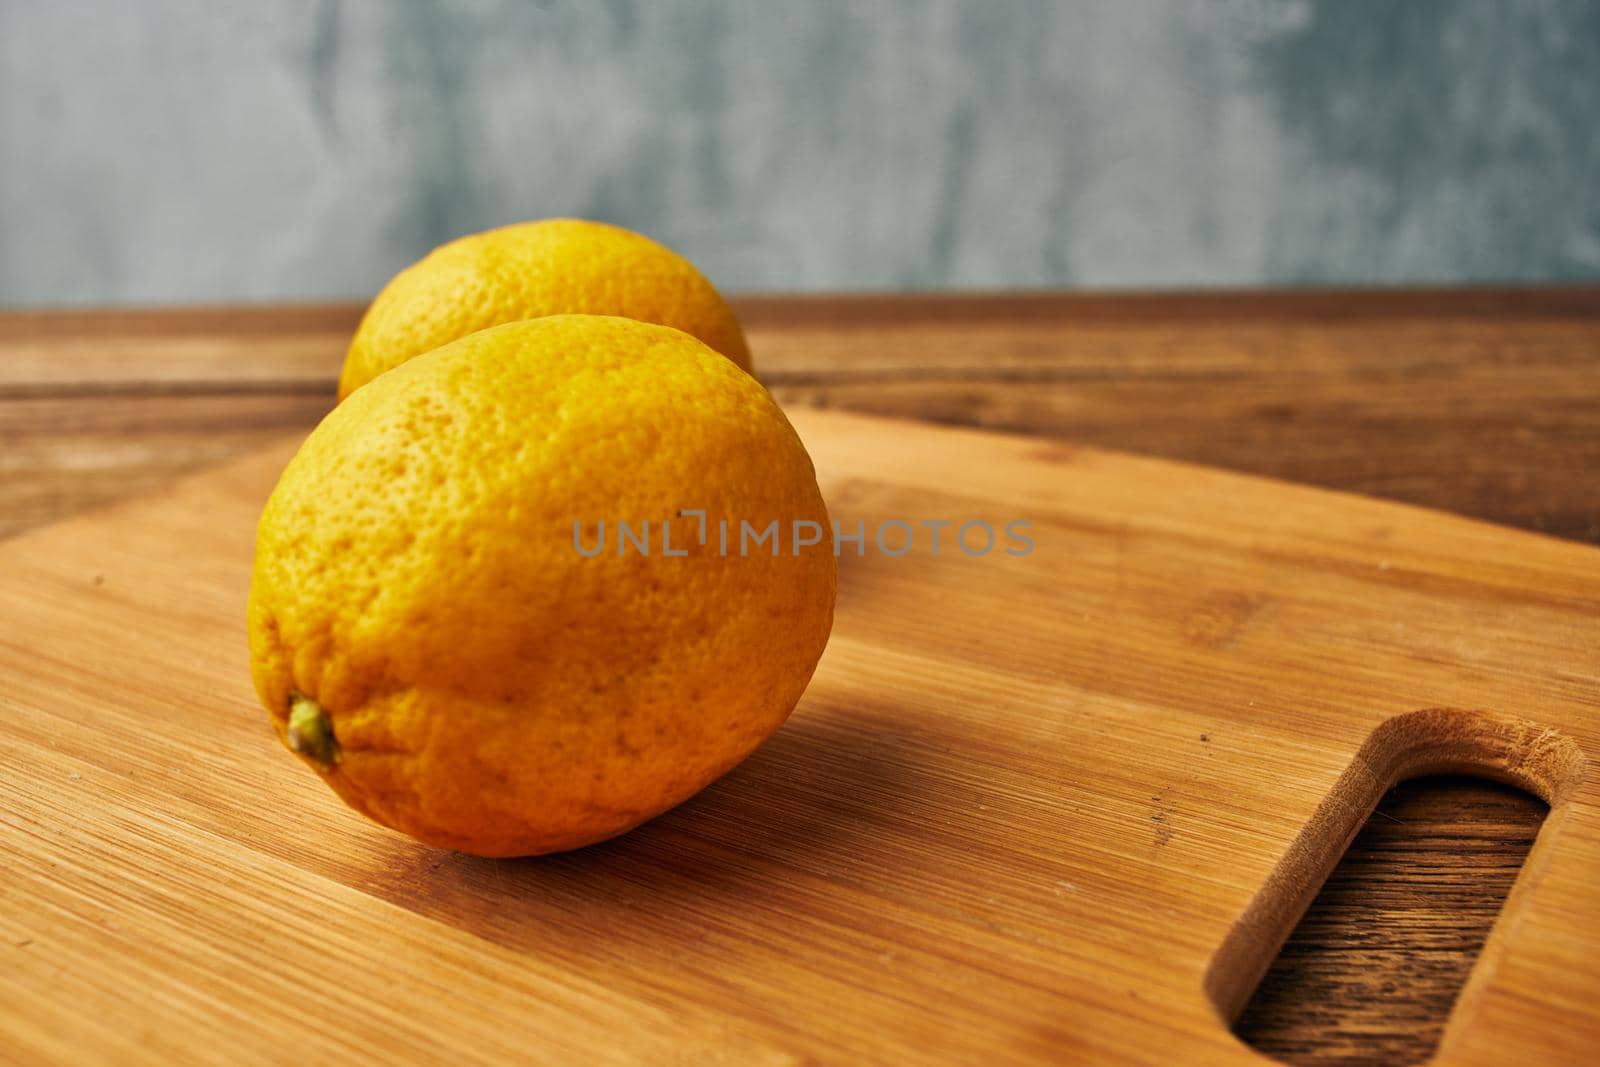 yellow lemon cutting board kitchen fresh food. High quality photo